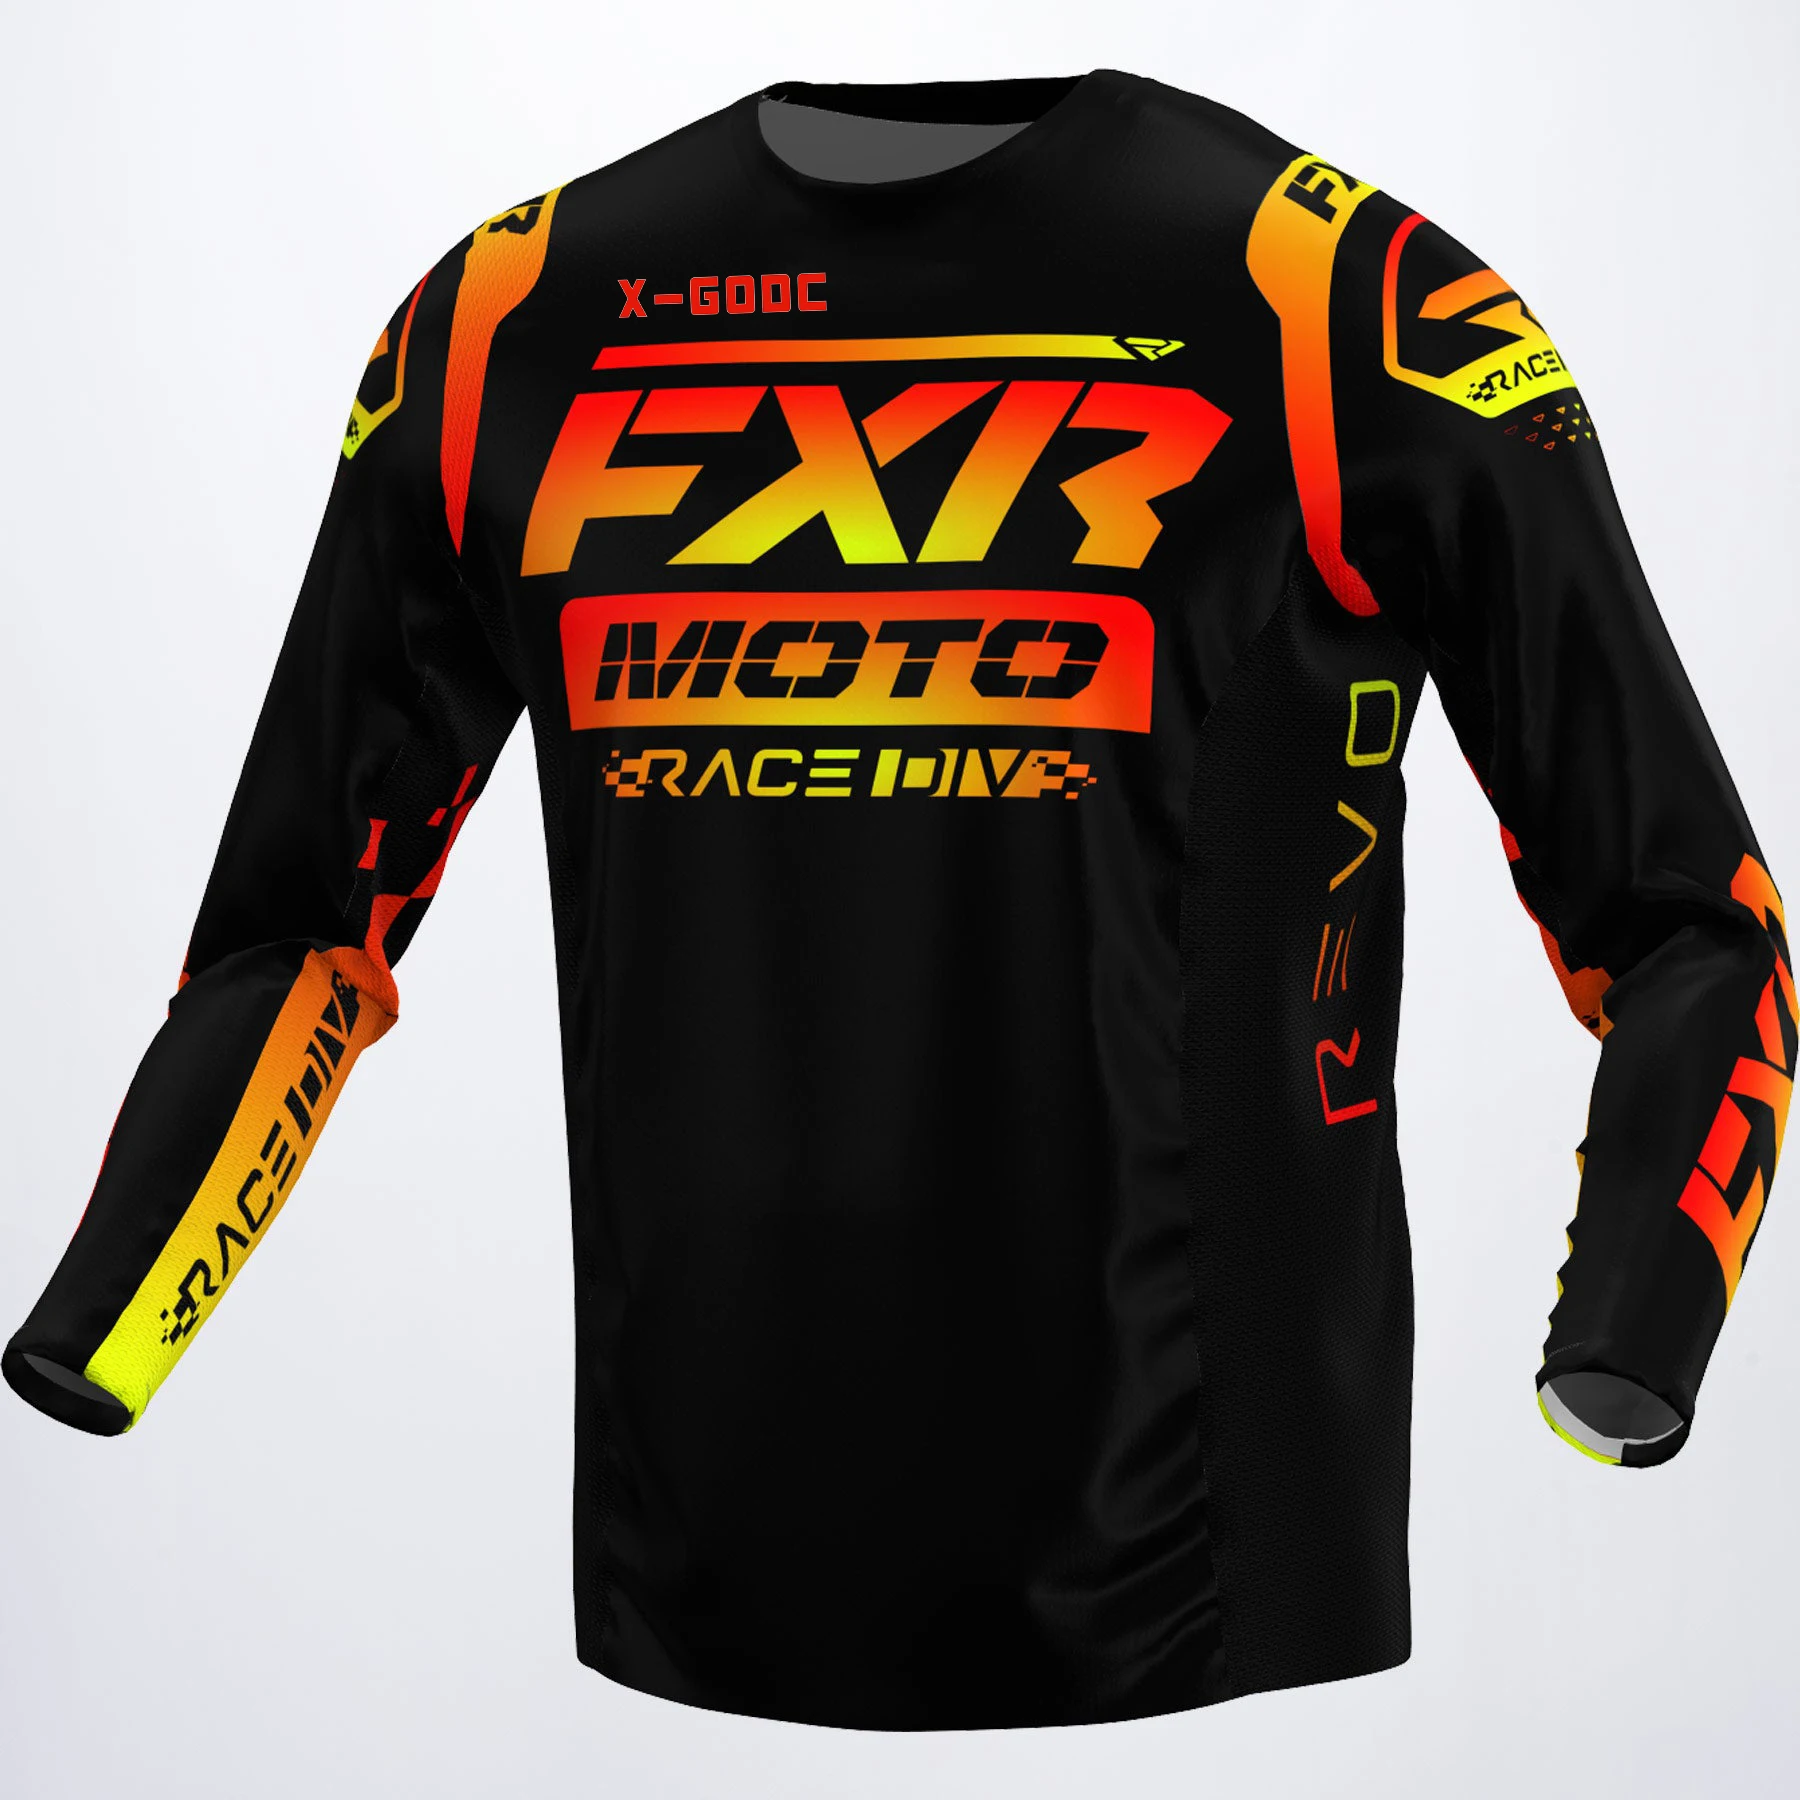 

2022 New Downhill Jersey Men's Mountain Bike MTB Shirt Offroad DH Motorcycle Jersey Motocross Sportwear Clothing X-GODC FXR